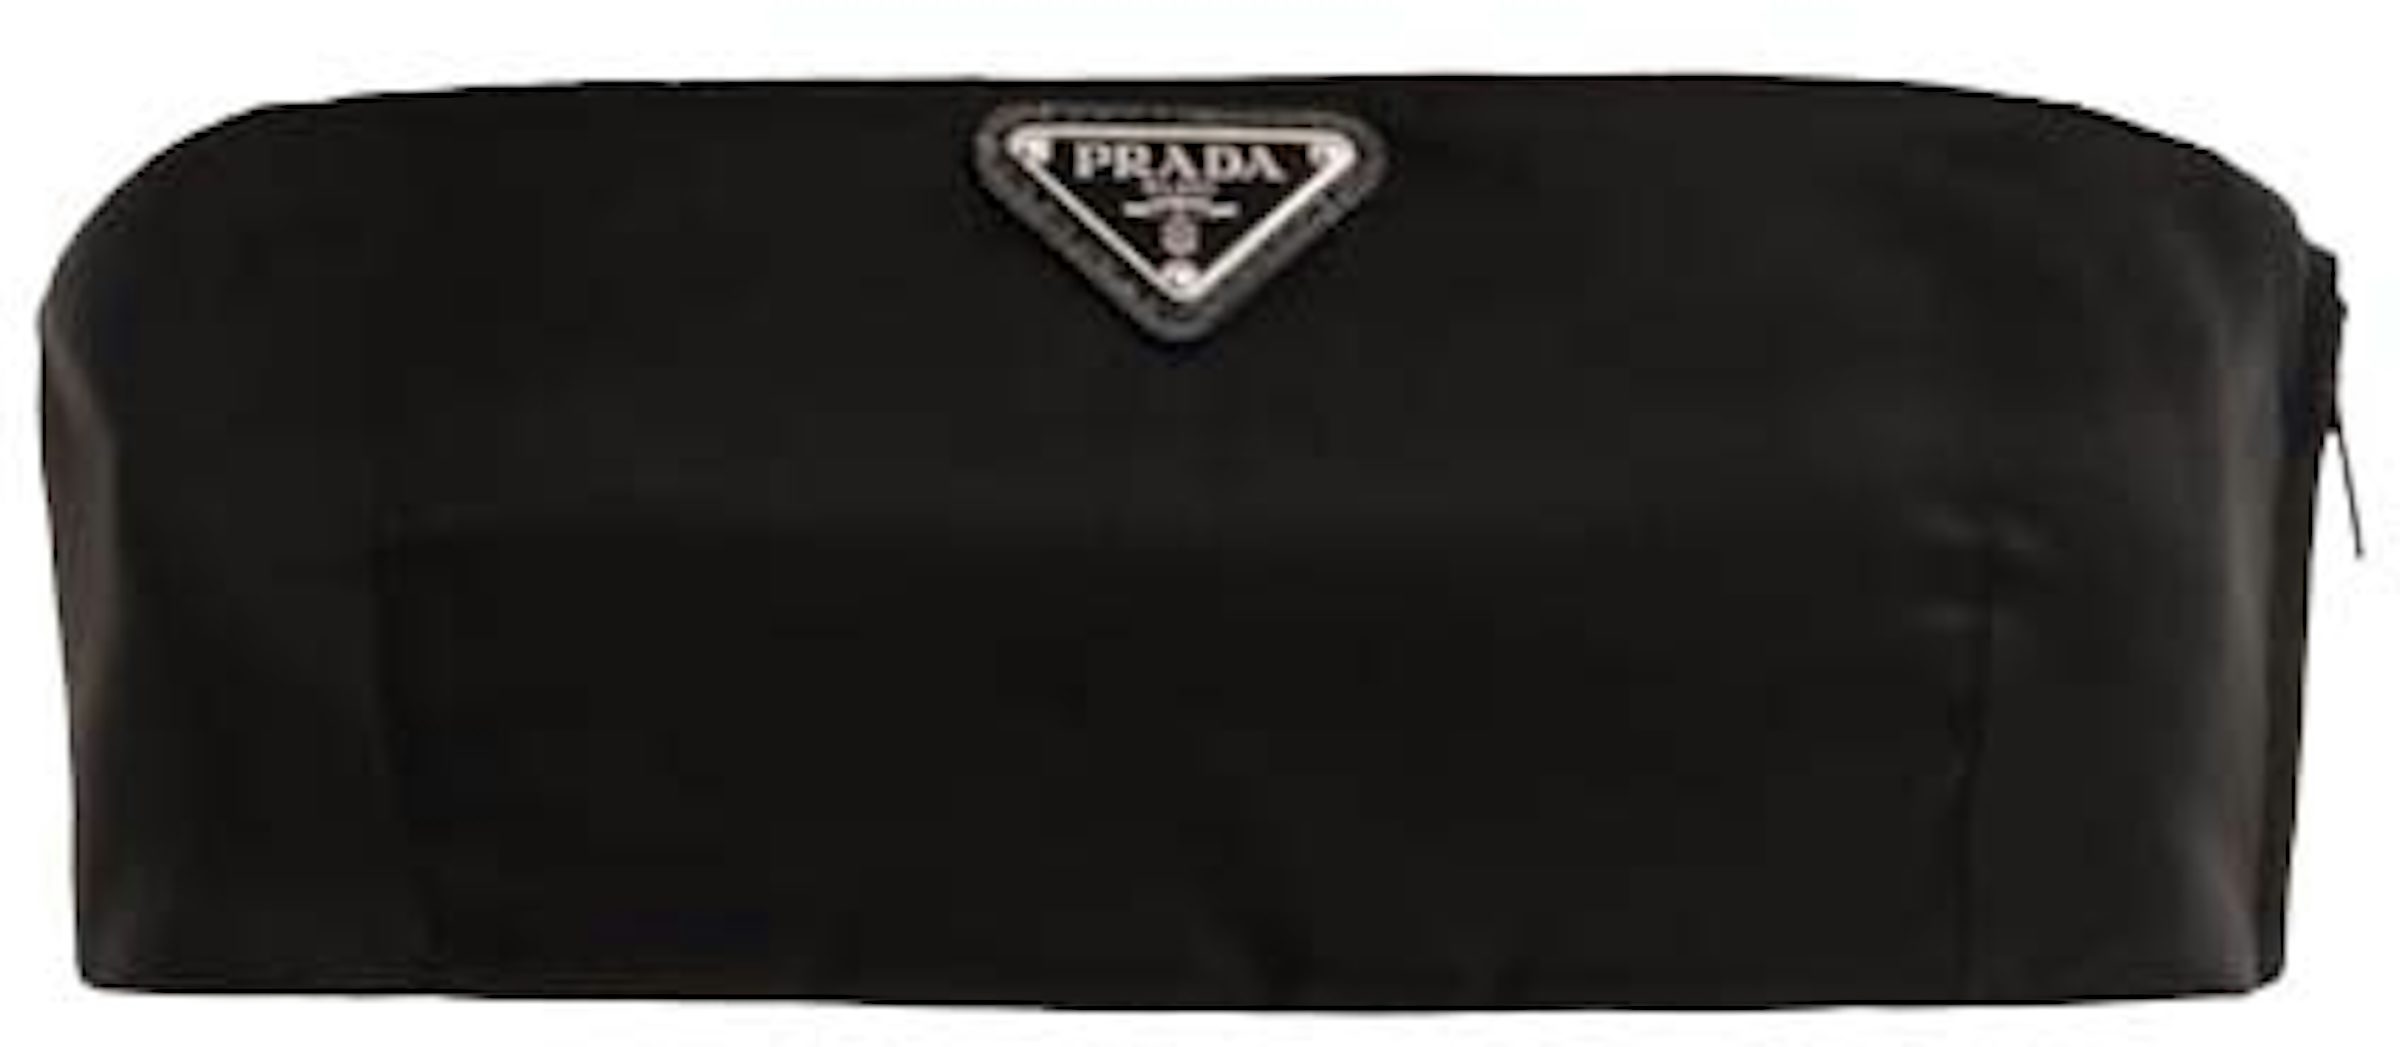 Prada Re-Nylon Short Sleeved Cropped Bowling Shirt Black Men's